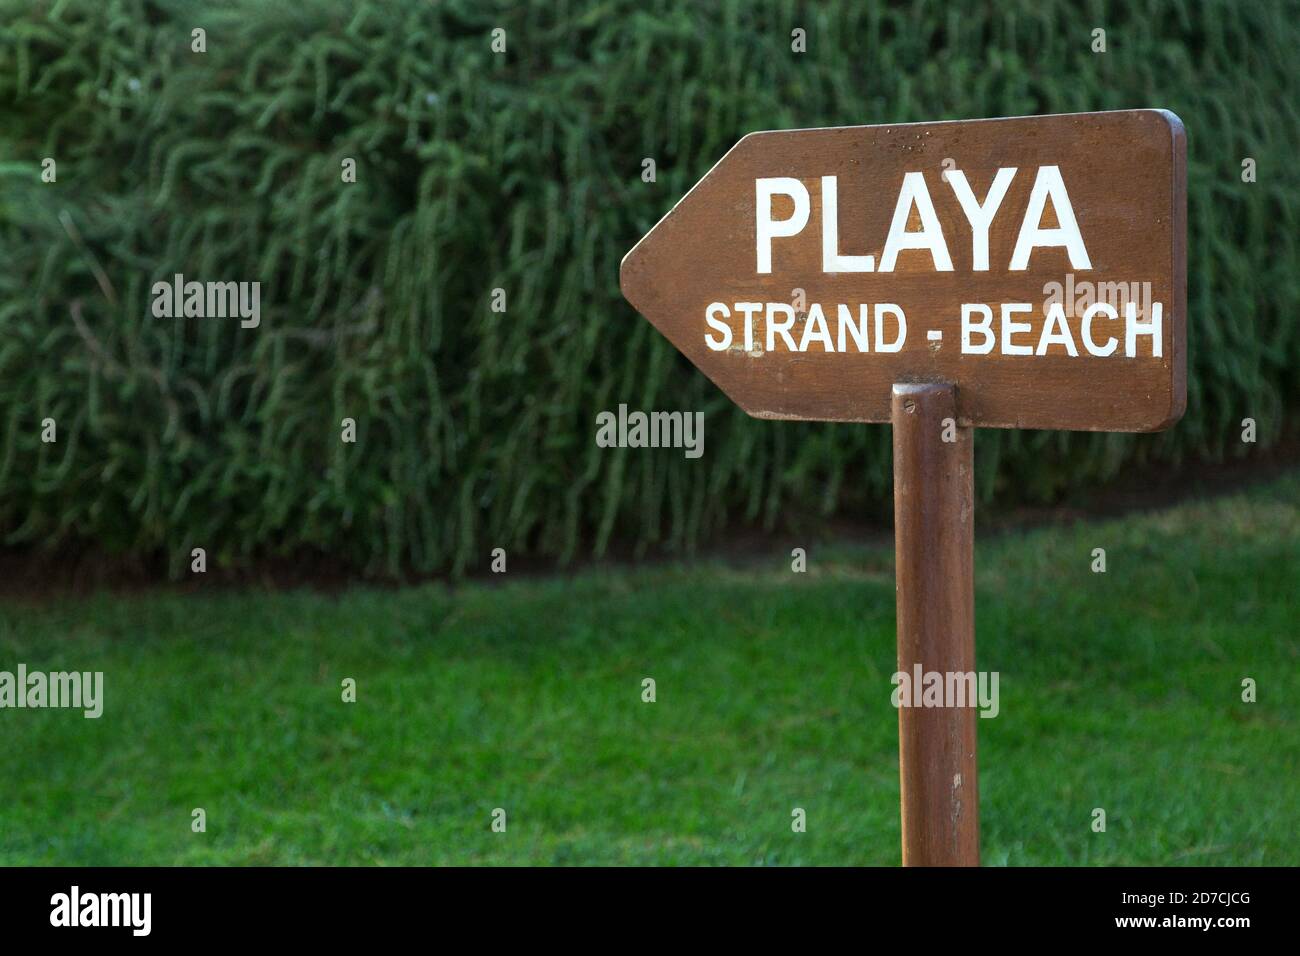 Playa Beach sign in Spanish, English and German. Blurred garden background. Stock Photo